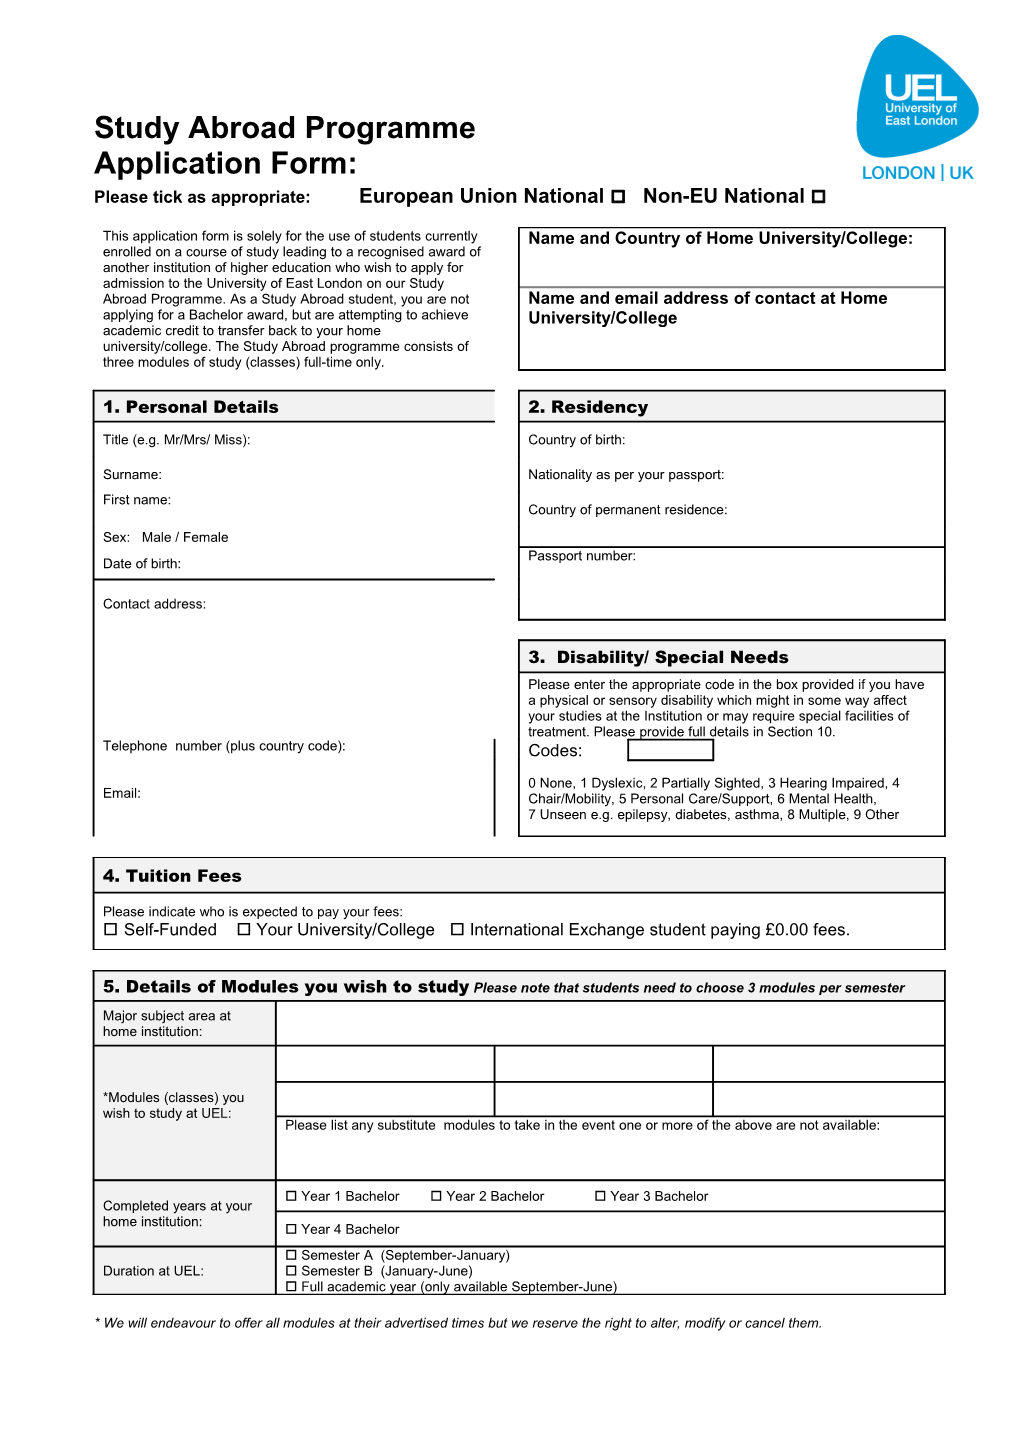 University Application Form